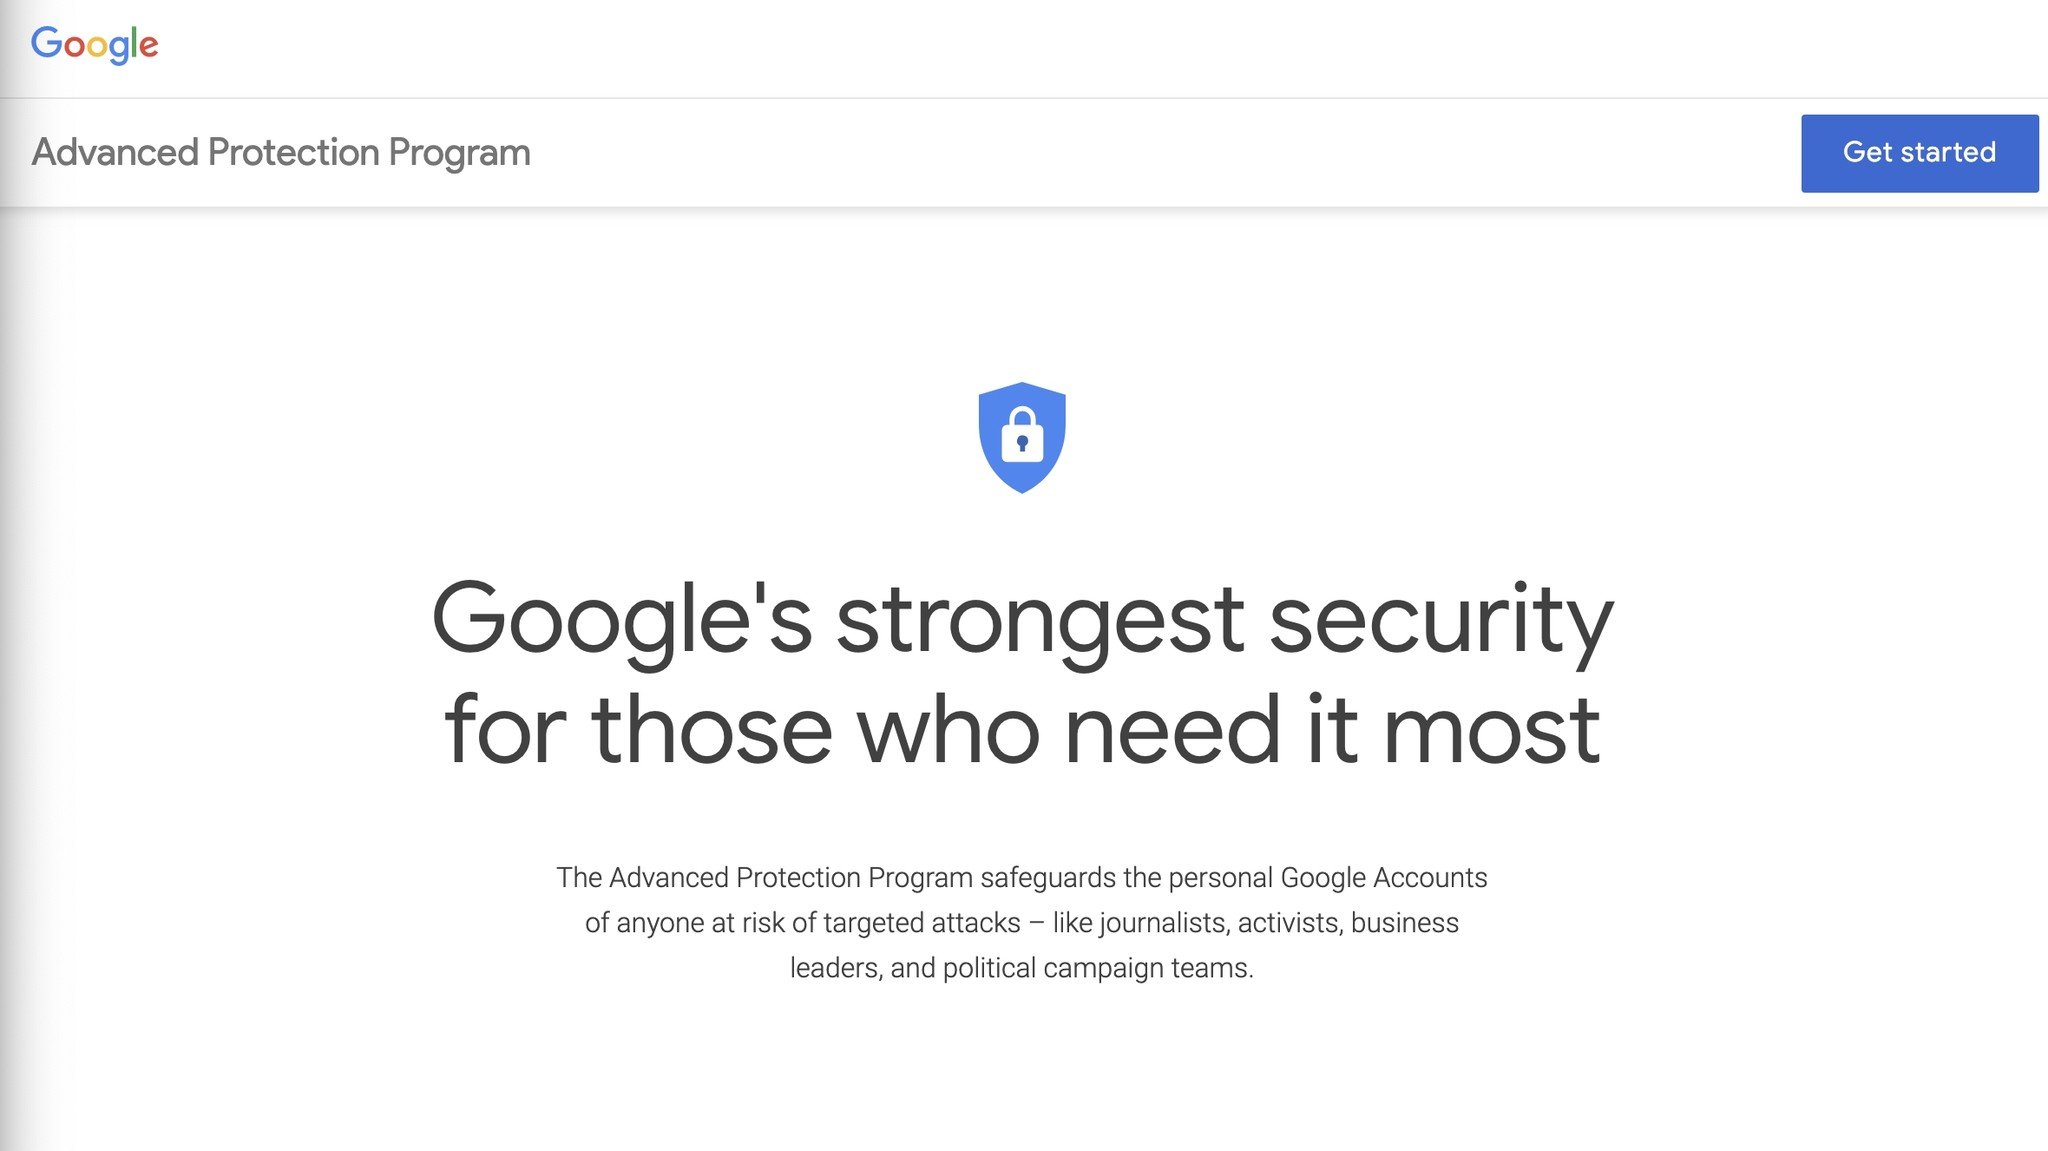 Google Advanced Protection Program landing page